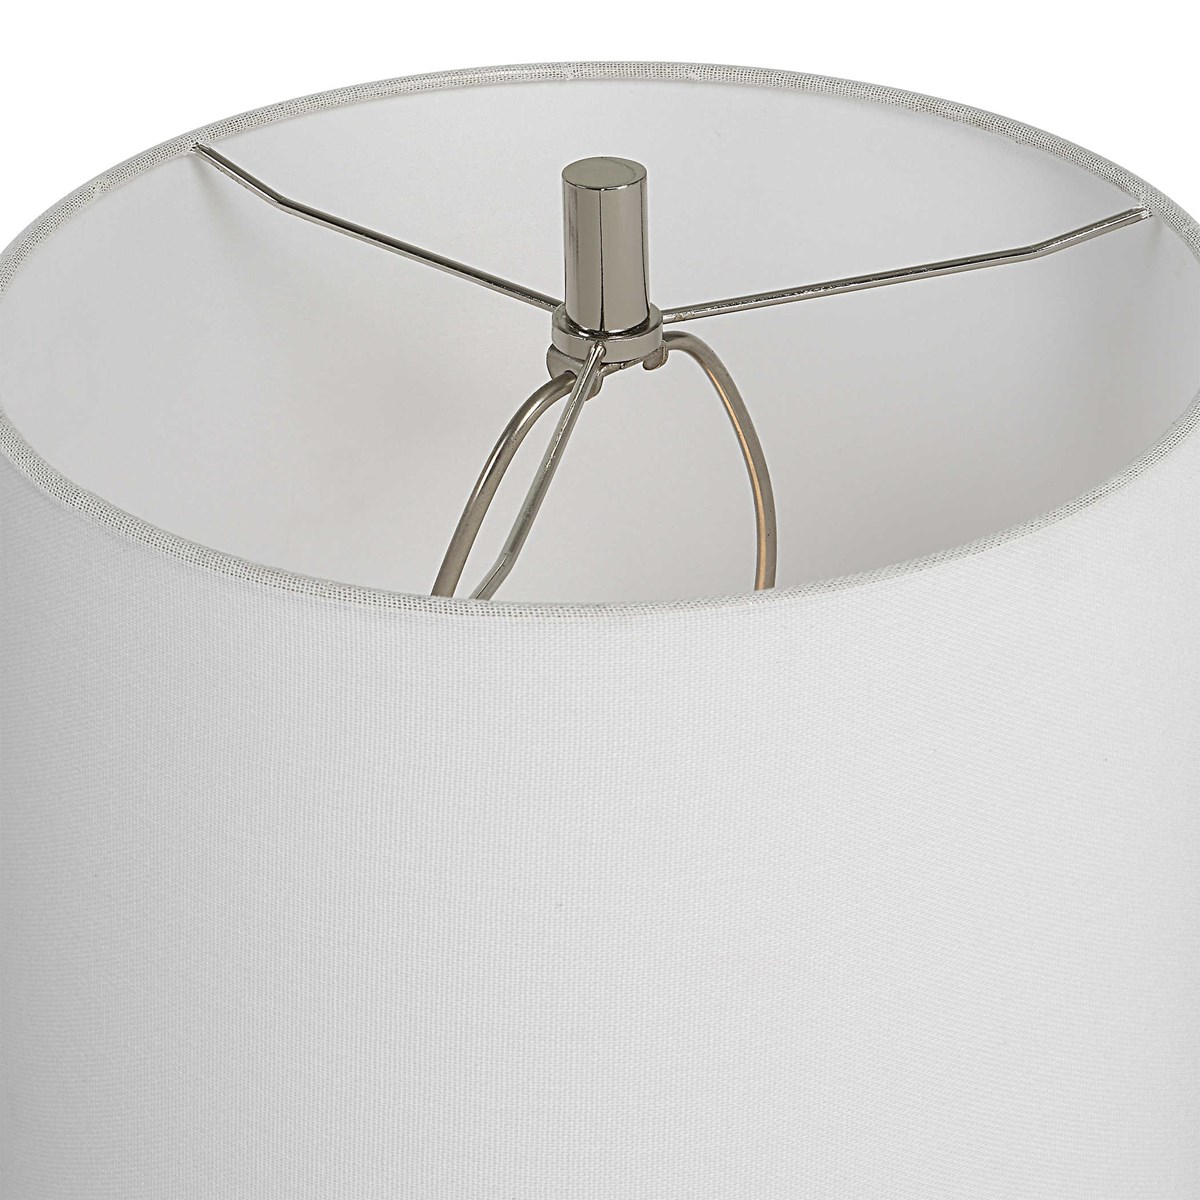 Лампа CHANTILLY BUFFET LAMP 29799-1 Uttermost США